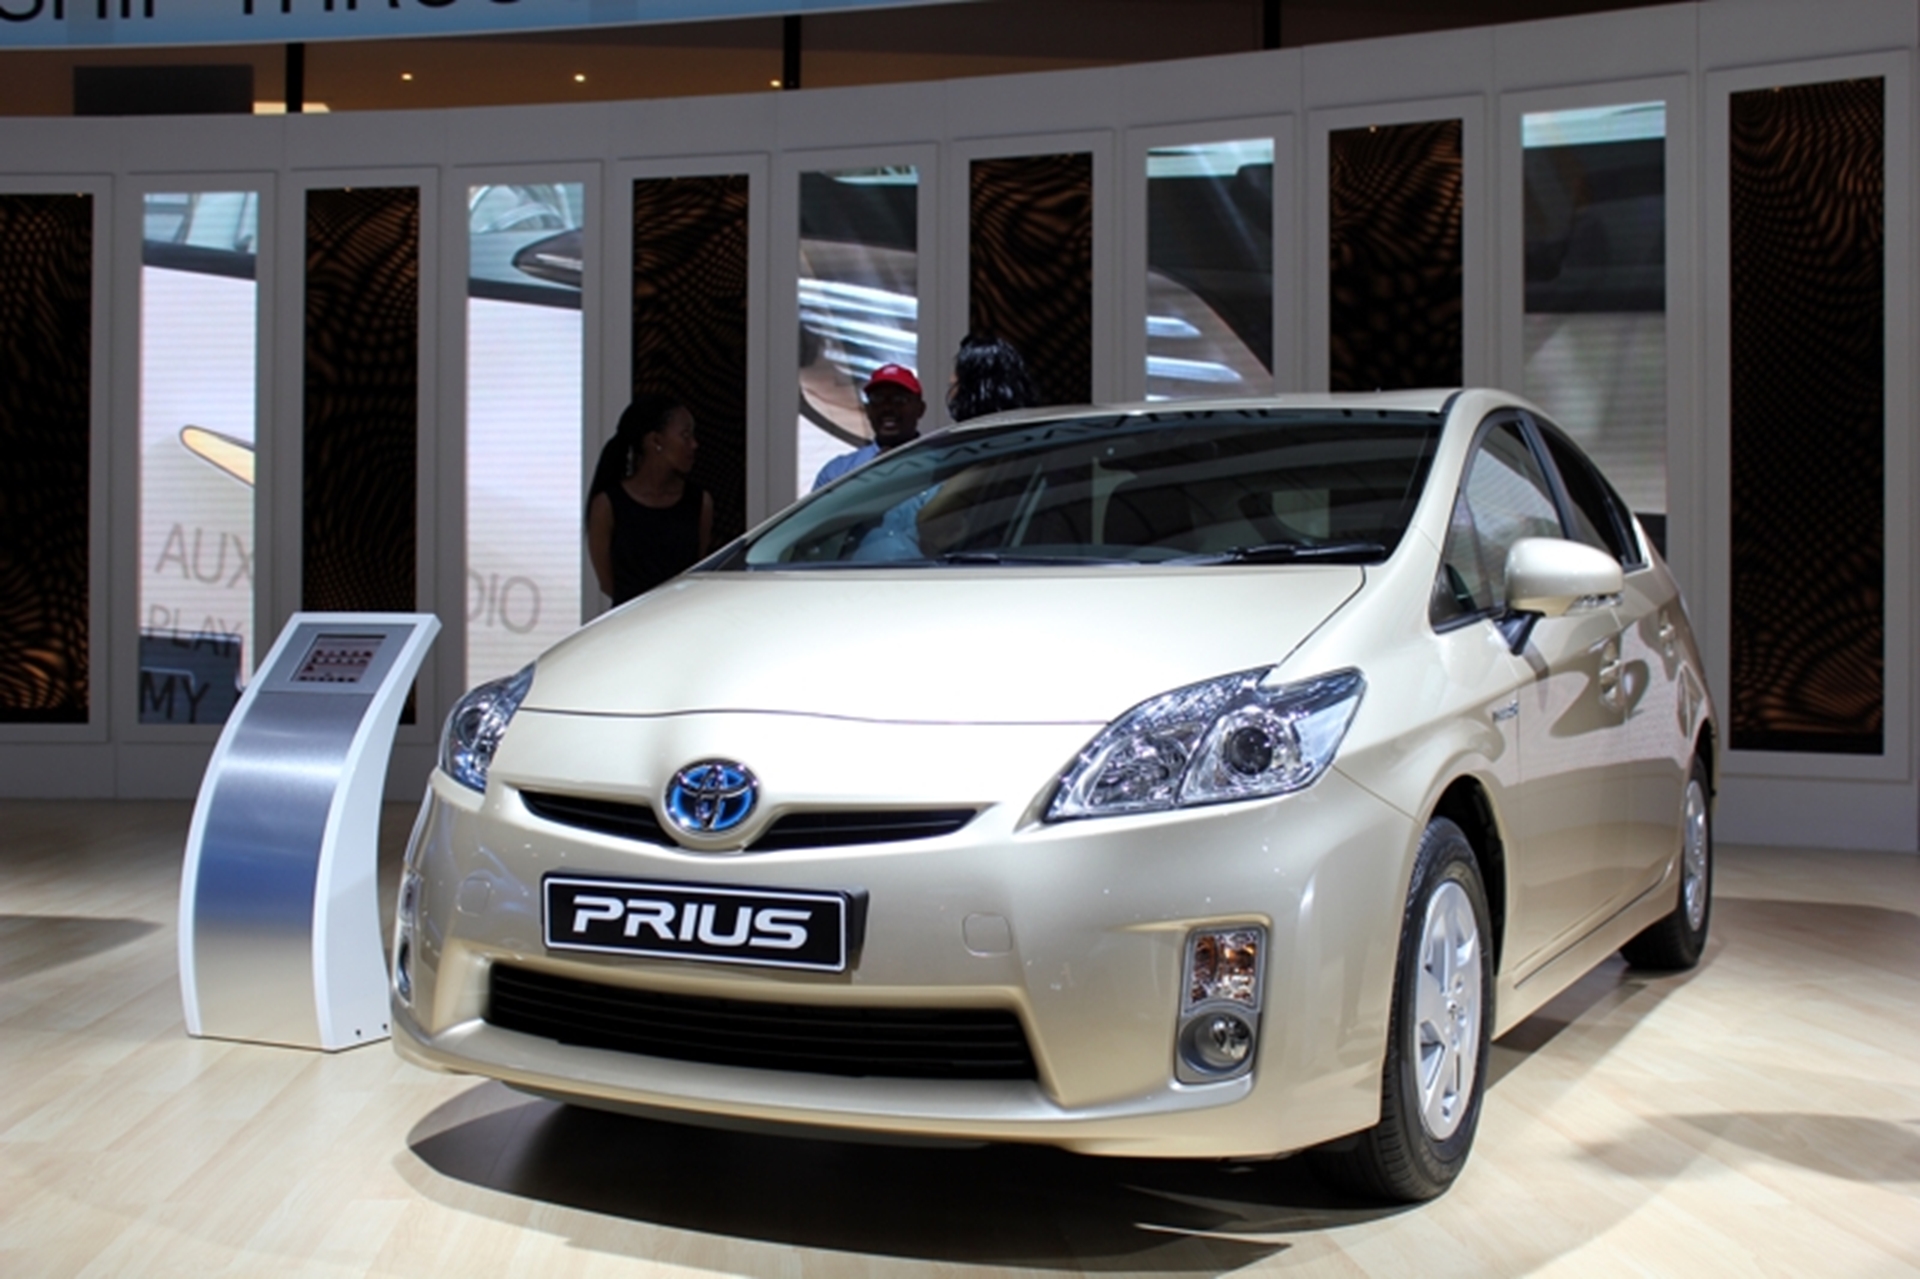 Auto Expo 2012: Toyota Launches the NEW Prius